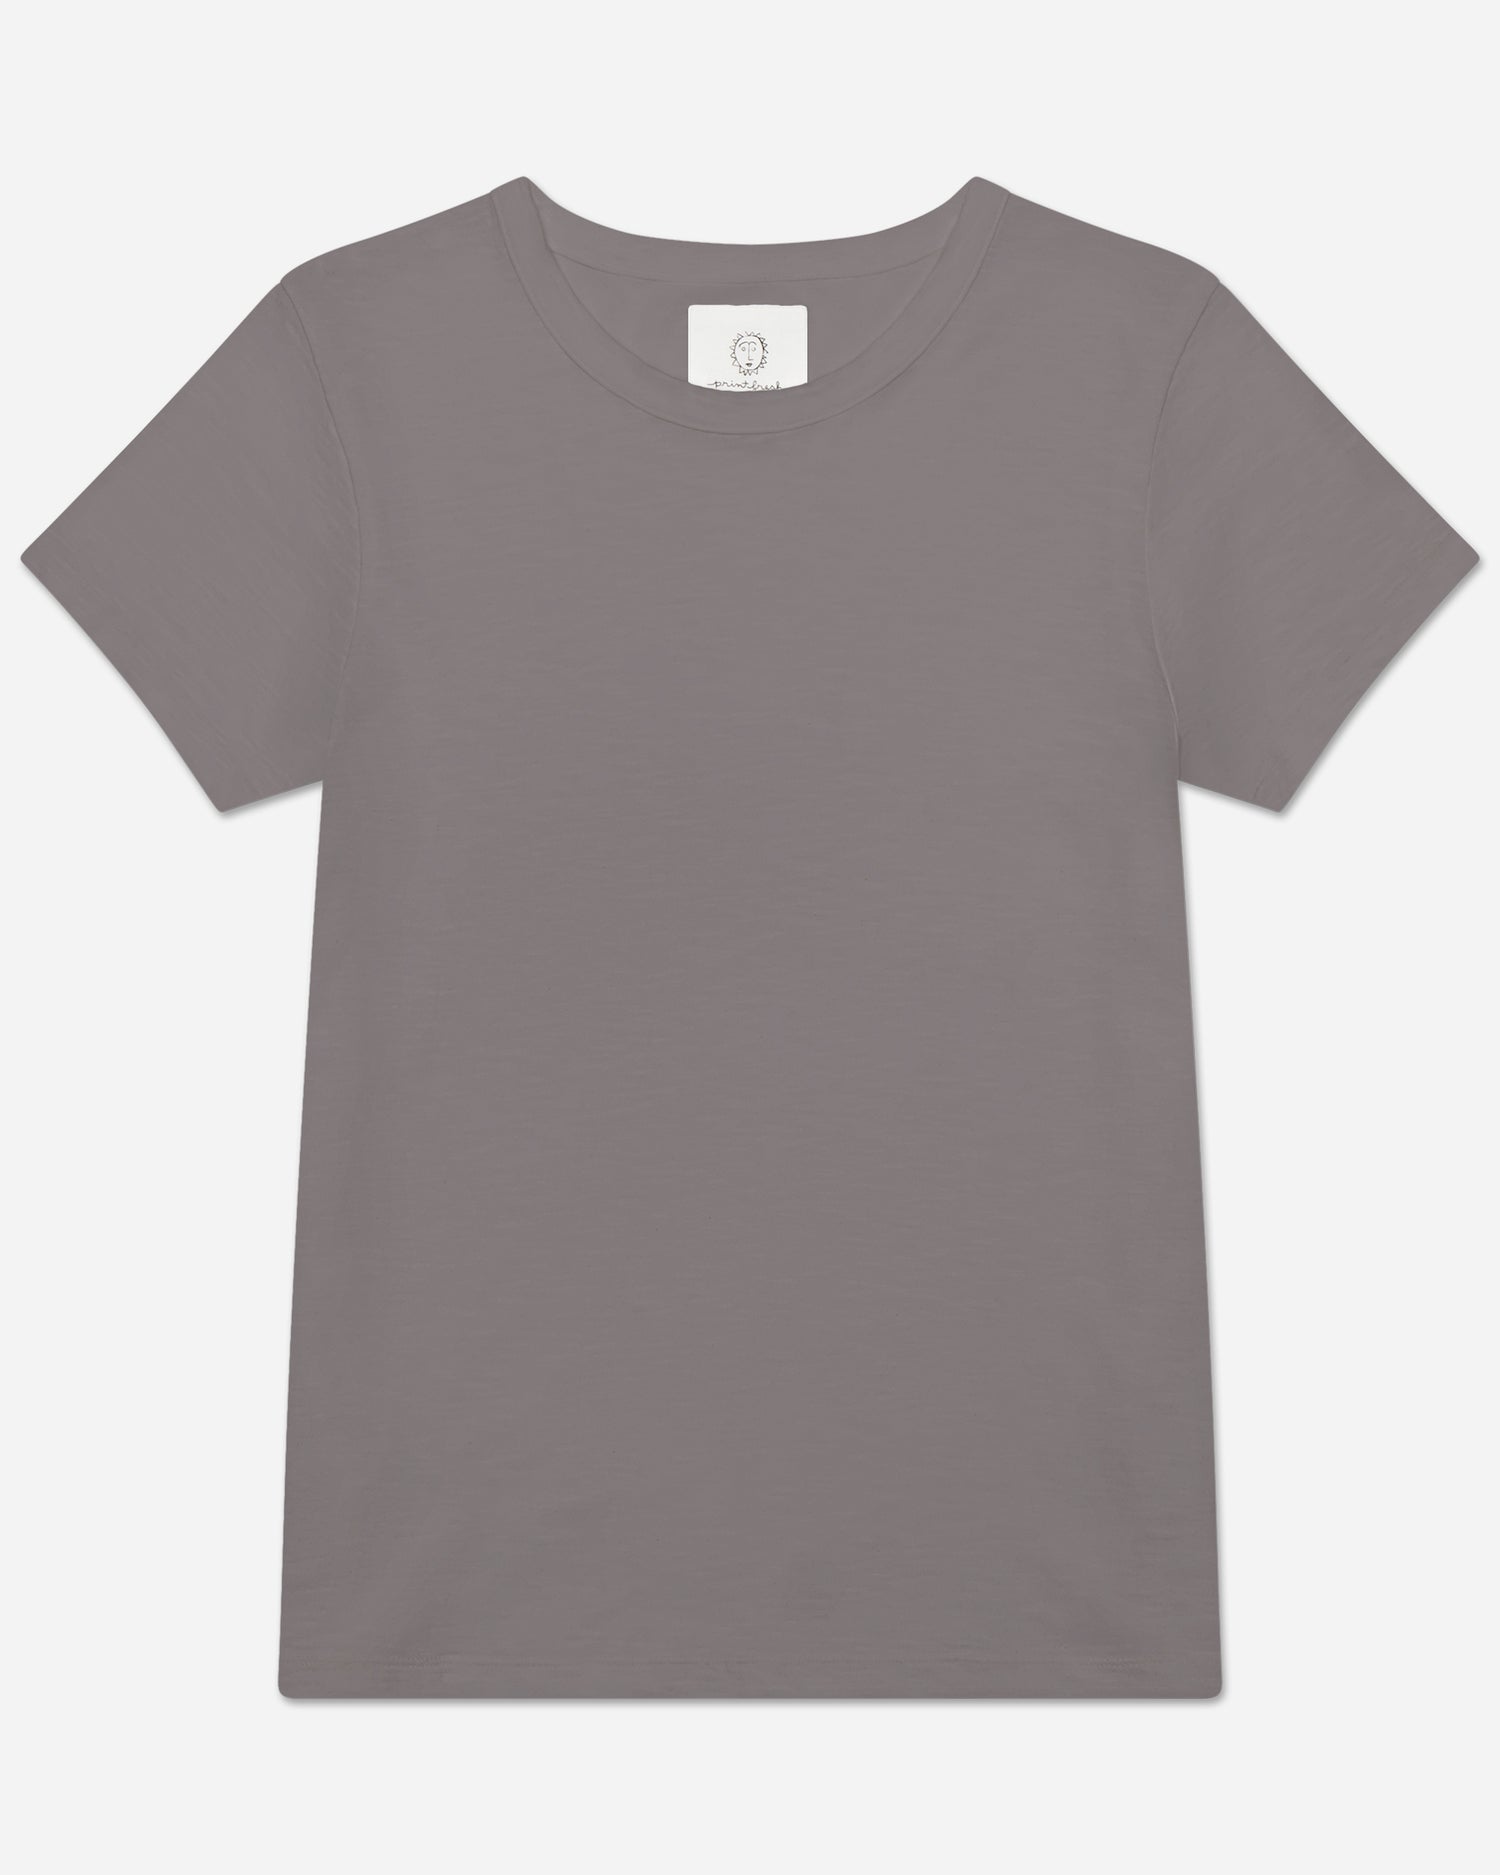 Saturday Tee - Knit T-Shirt - Pebble - Printfresh